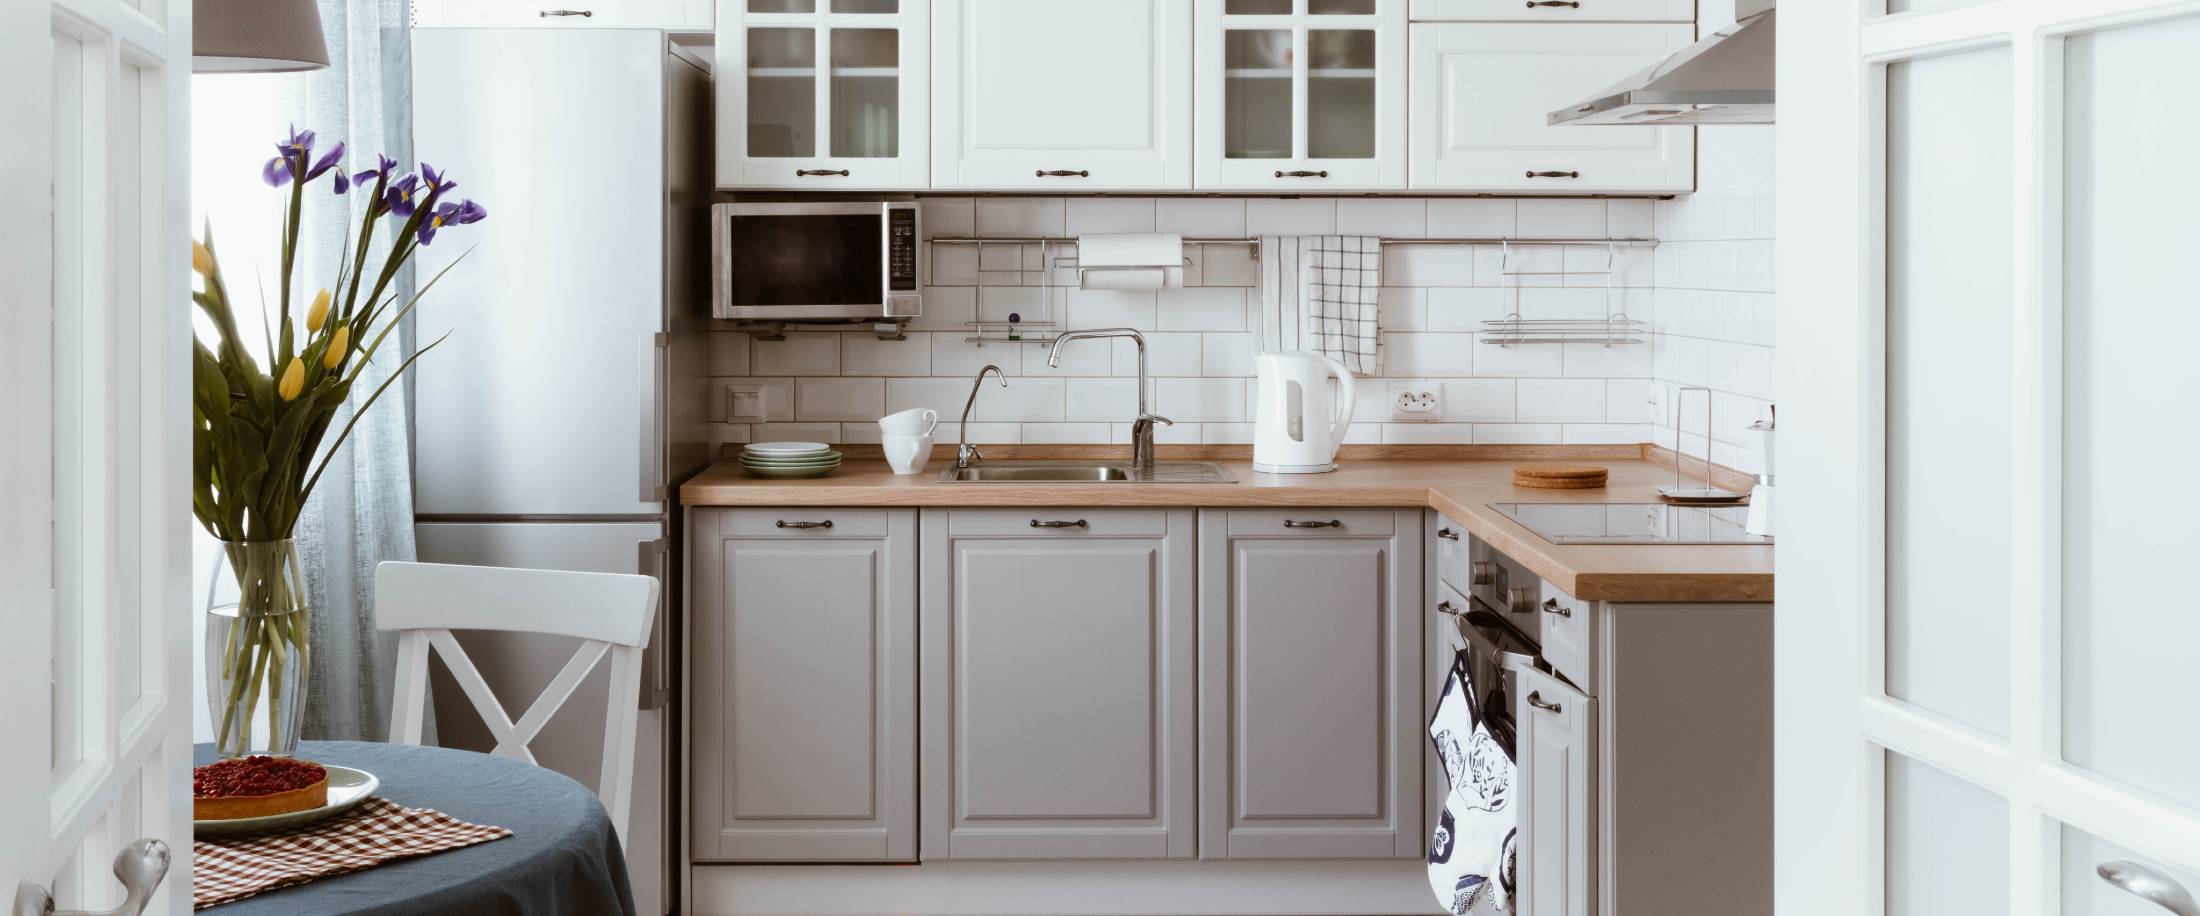 Basics Kitchen Storage Cabinet Review - Small Kitchen Ideas